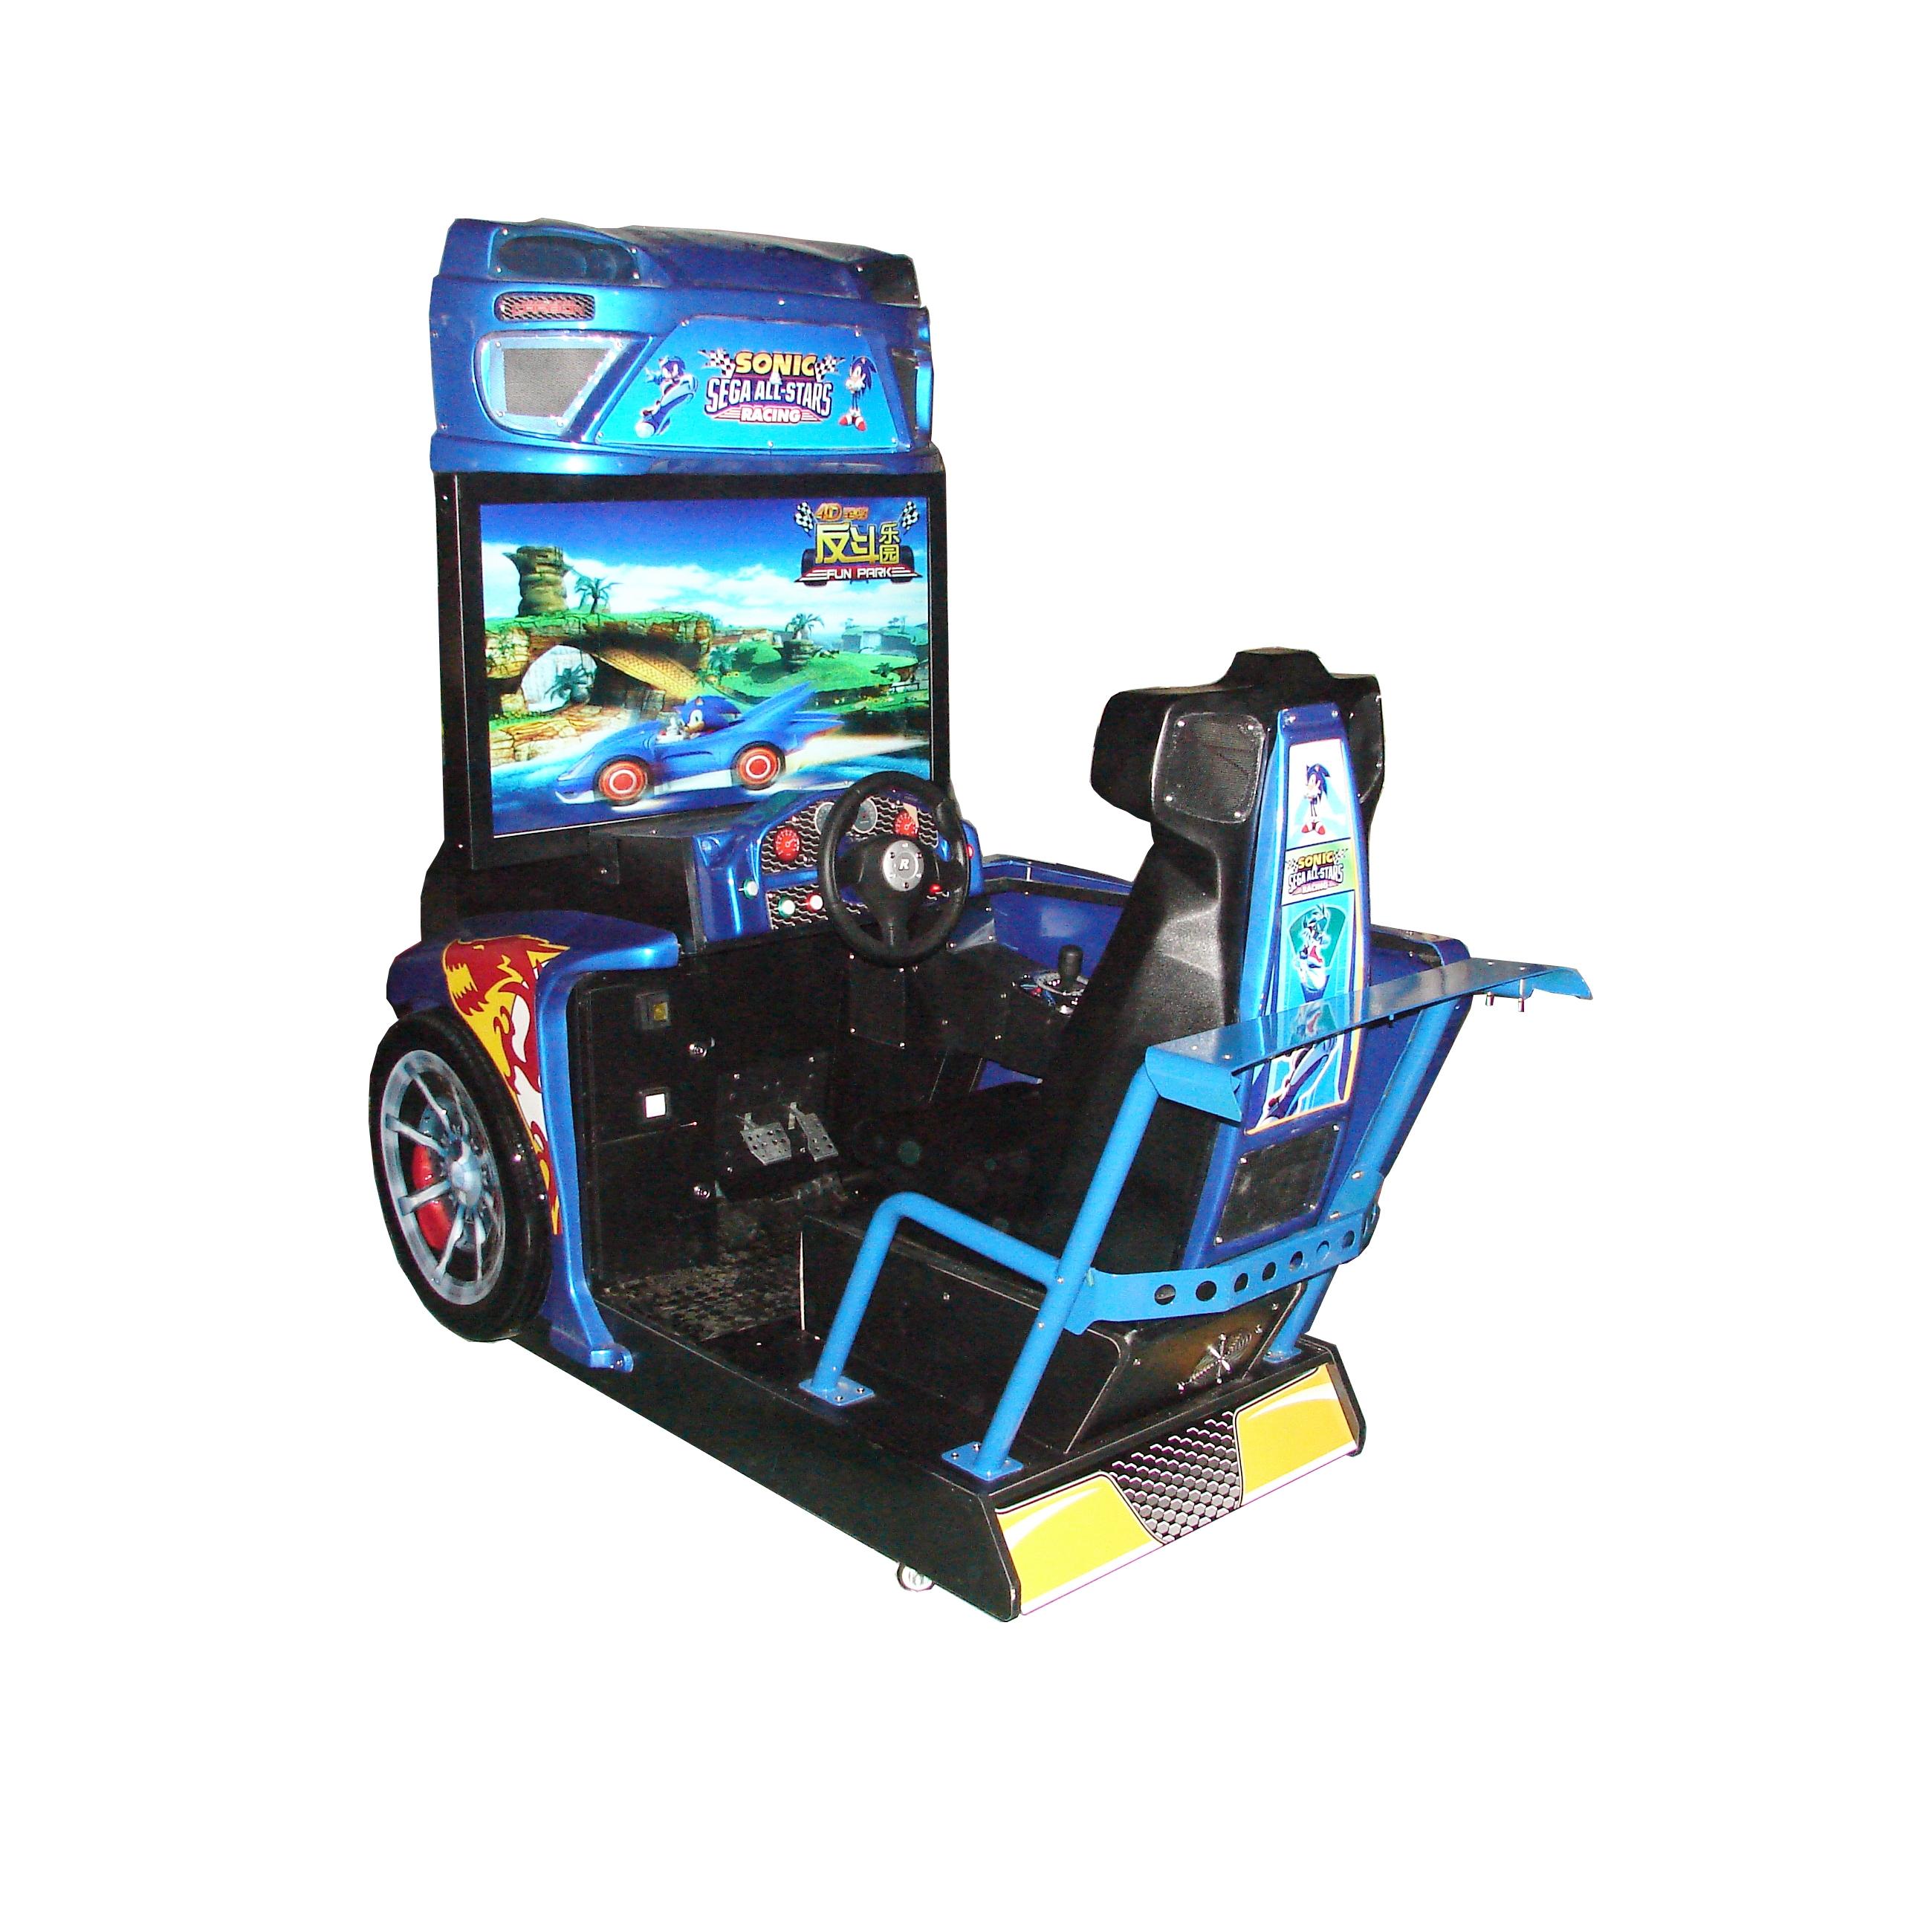 Hotselling 42"Sonic Racing simulator racing arcade game